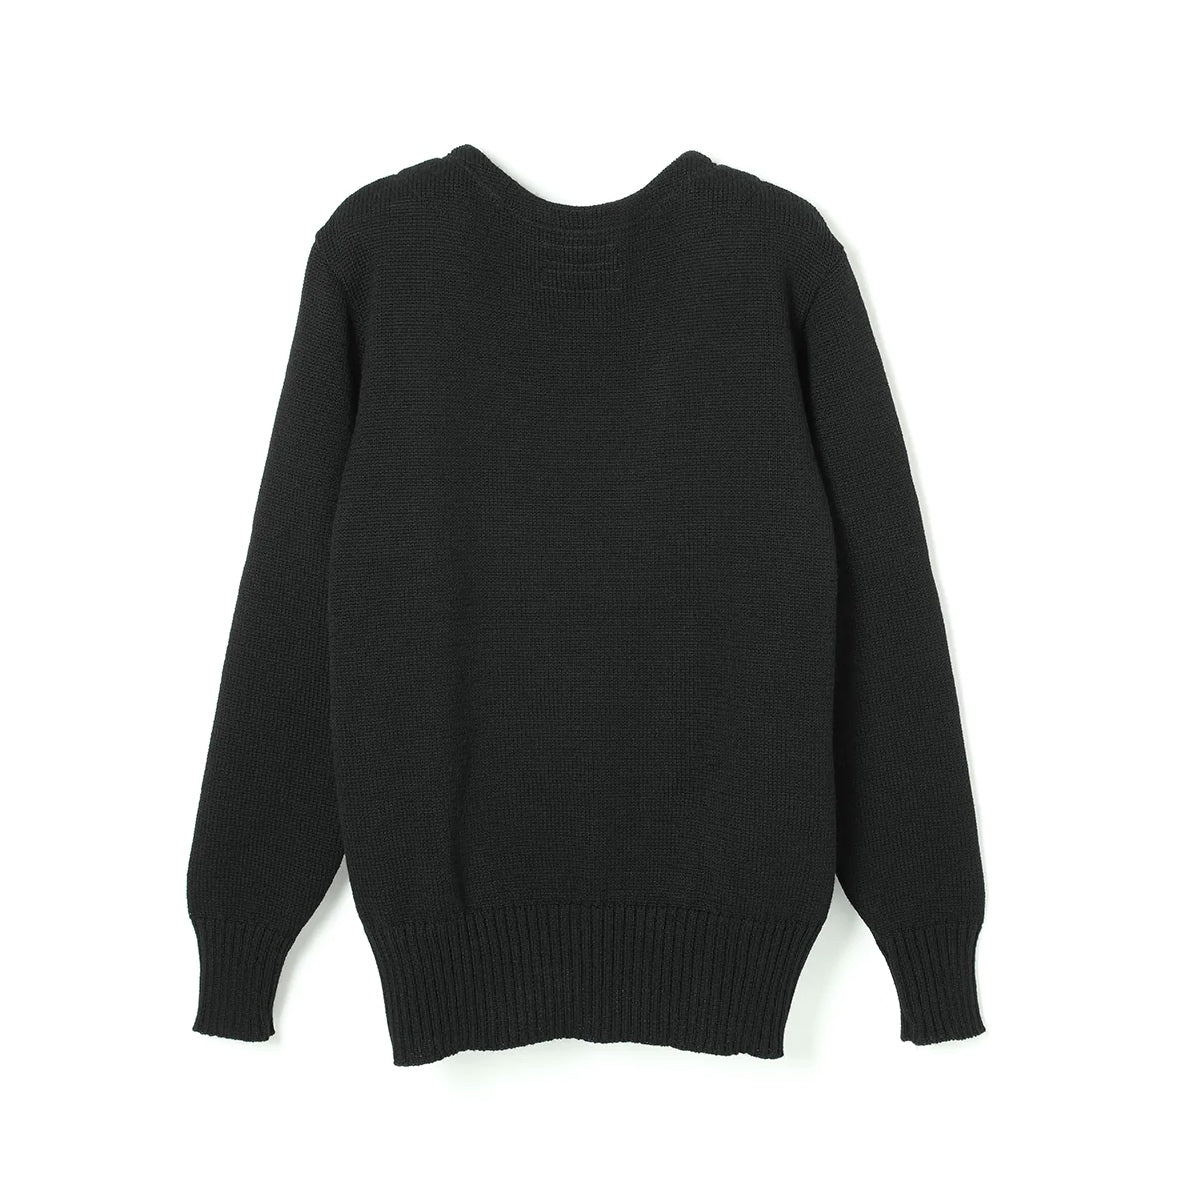 Boat neck sweater - Black